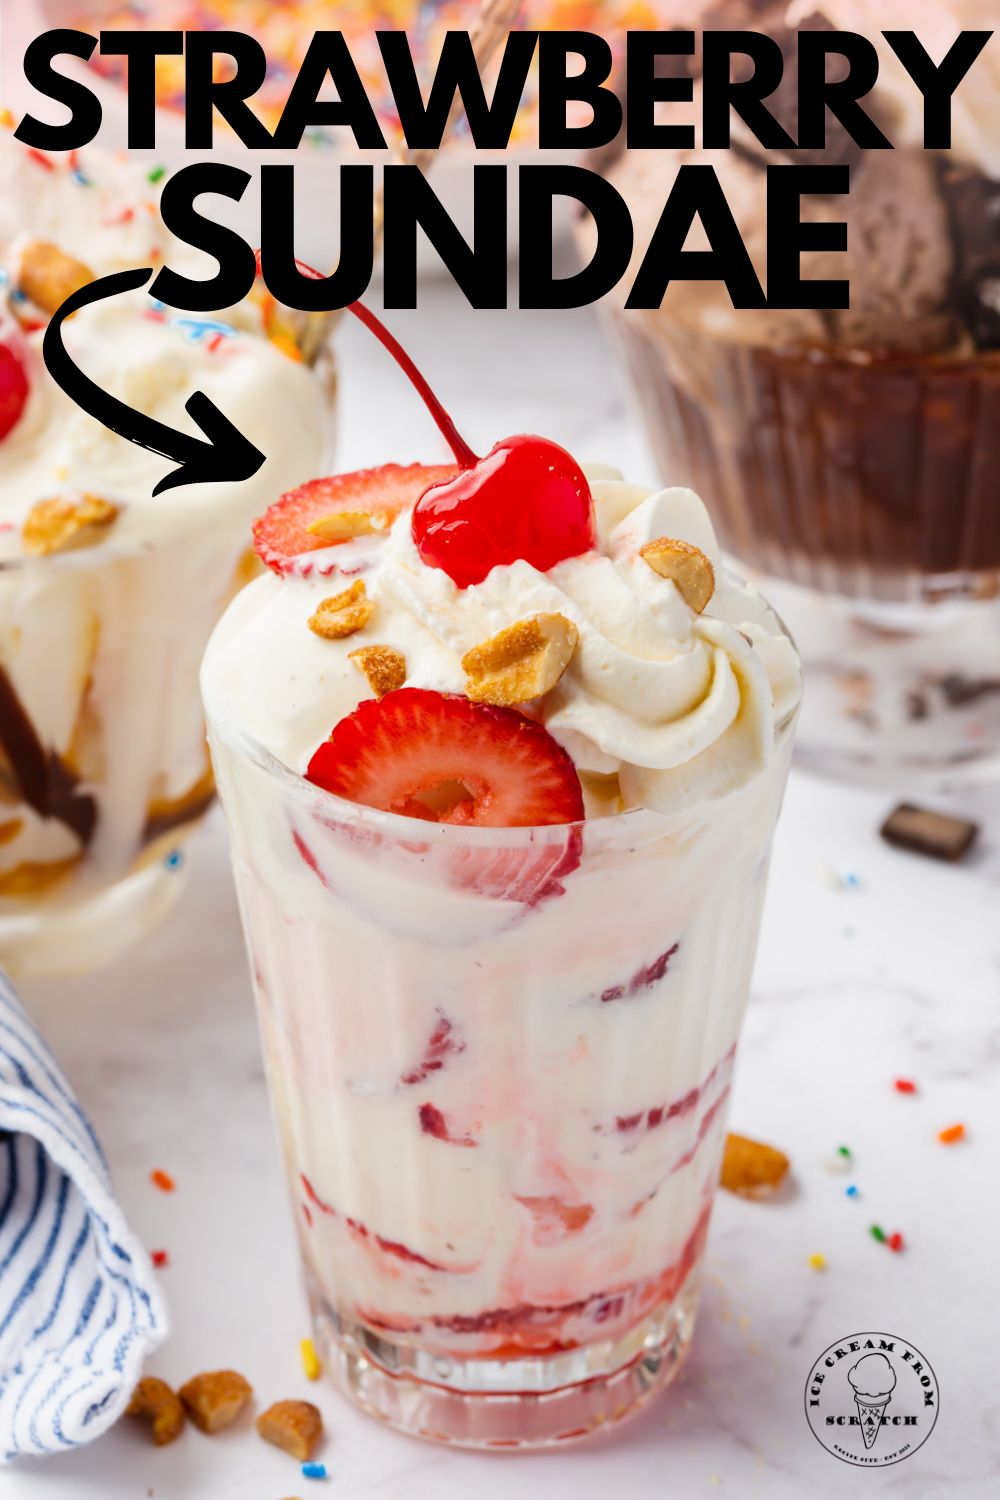 a strawberry sundae in a glass. Text overlay says "strawberry sundae"